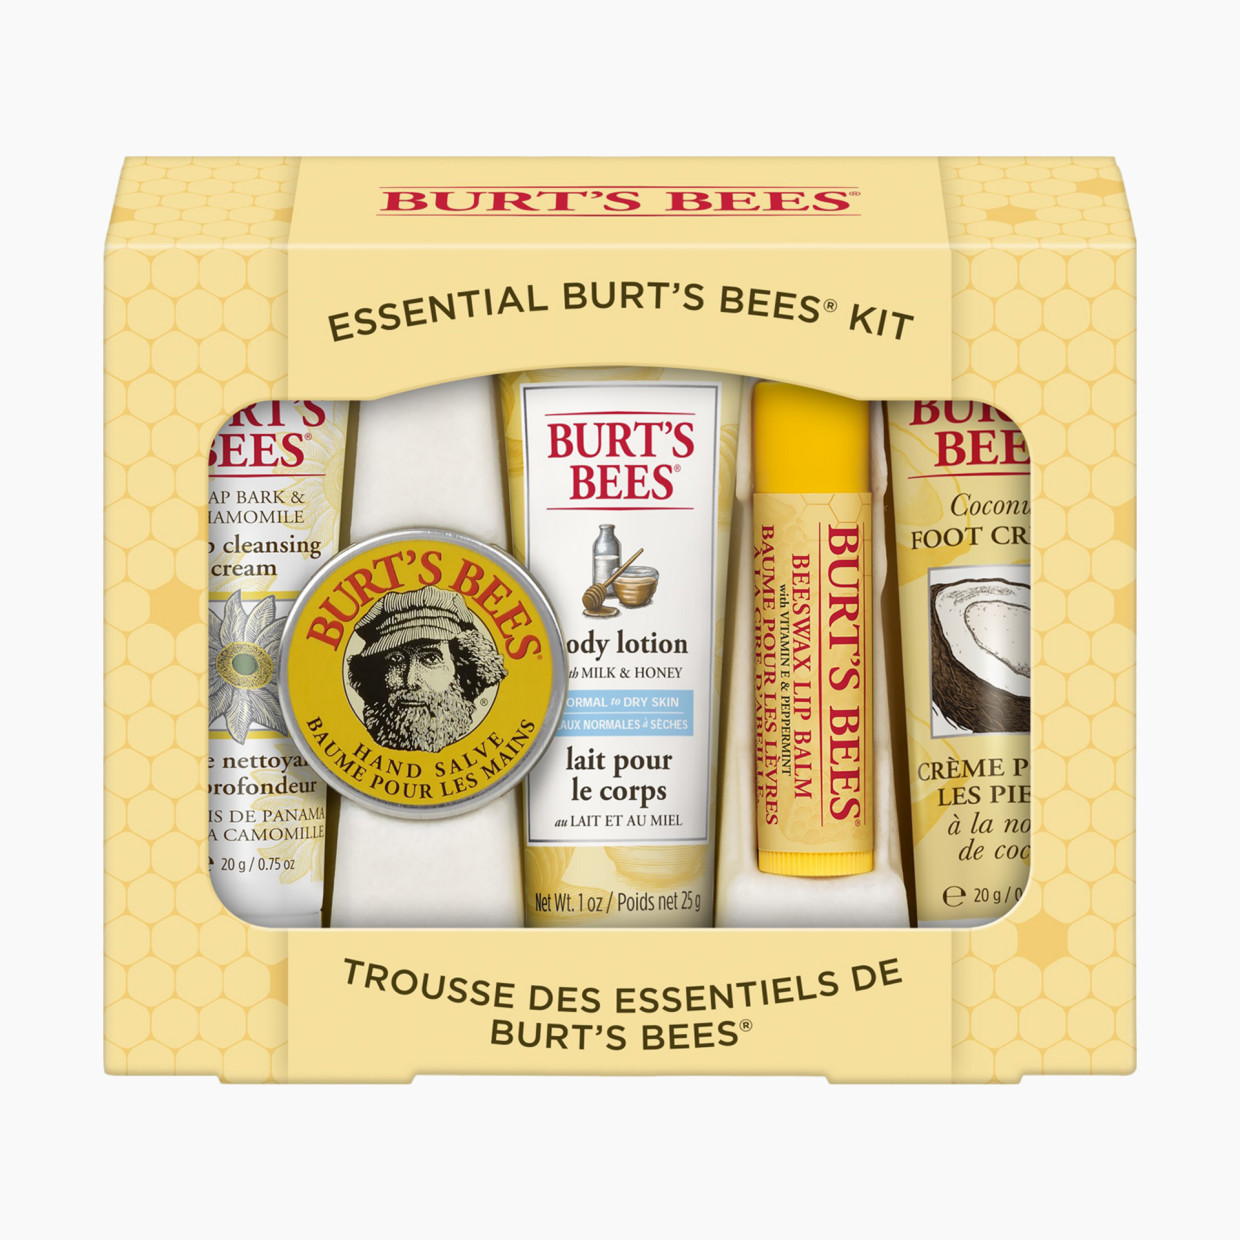 Burt's Bees Burt's Bees Essentials Kit.